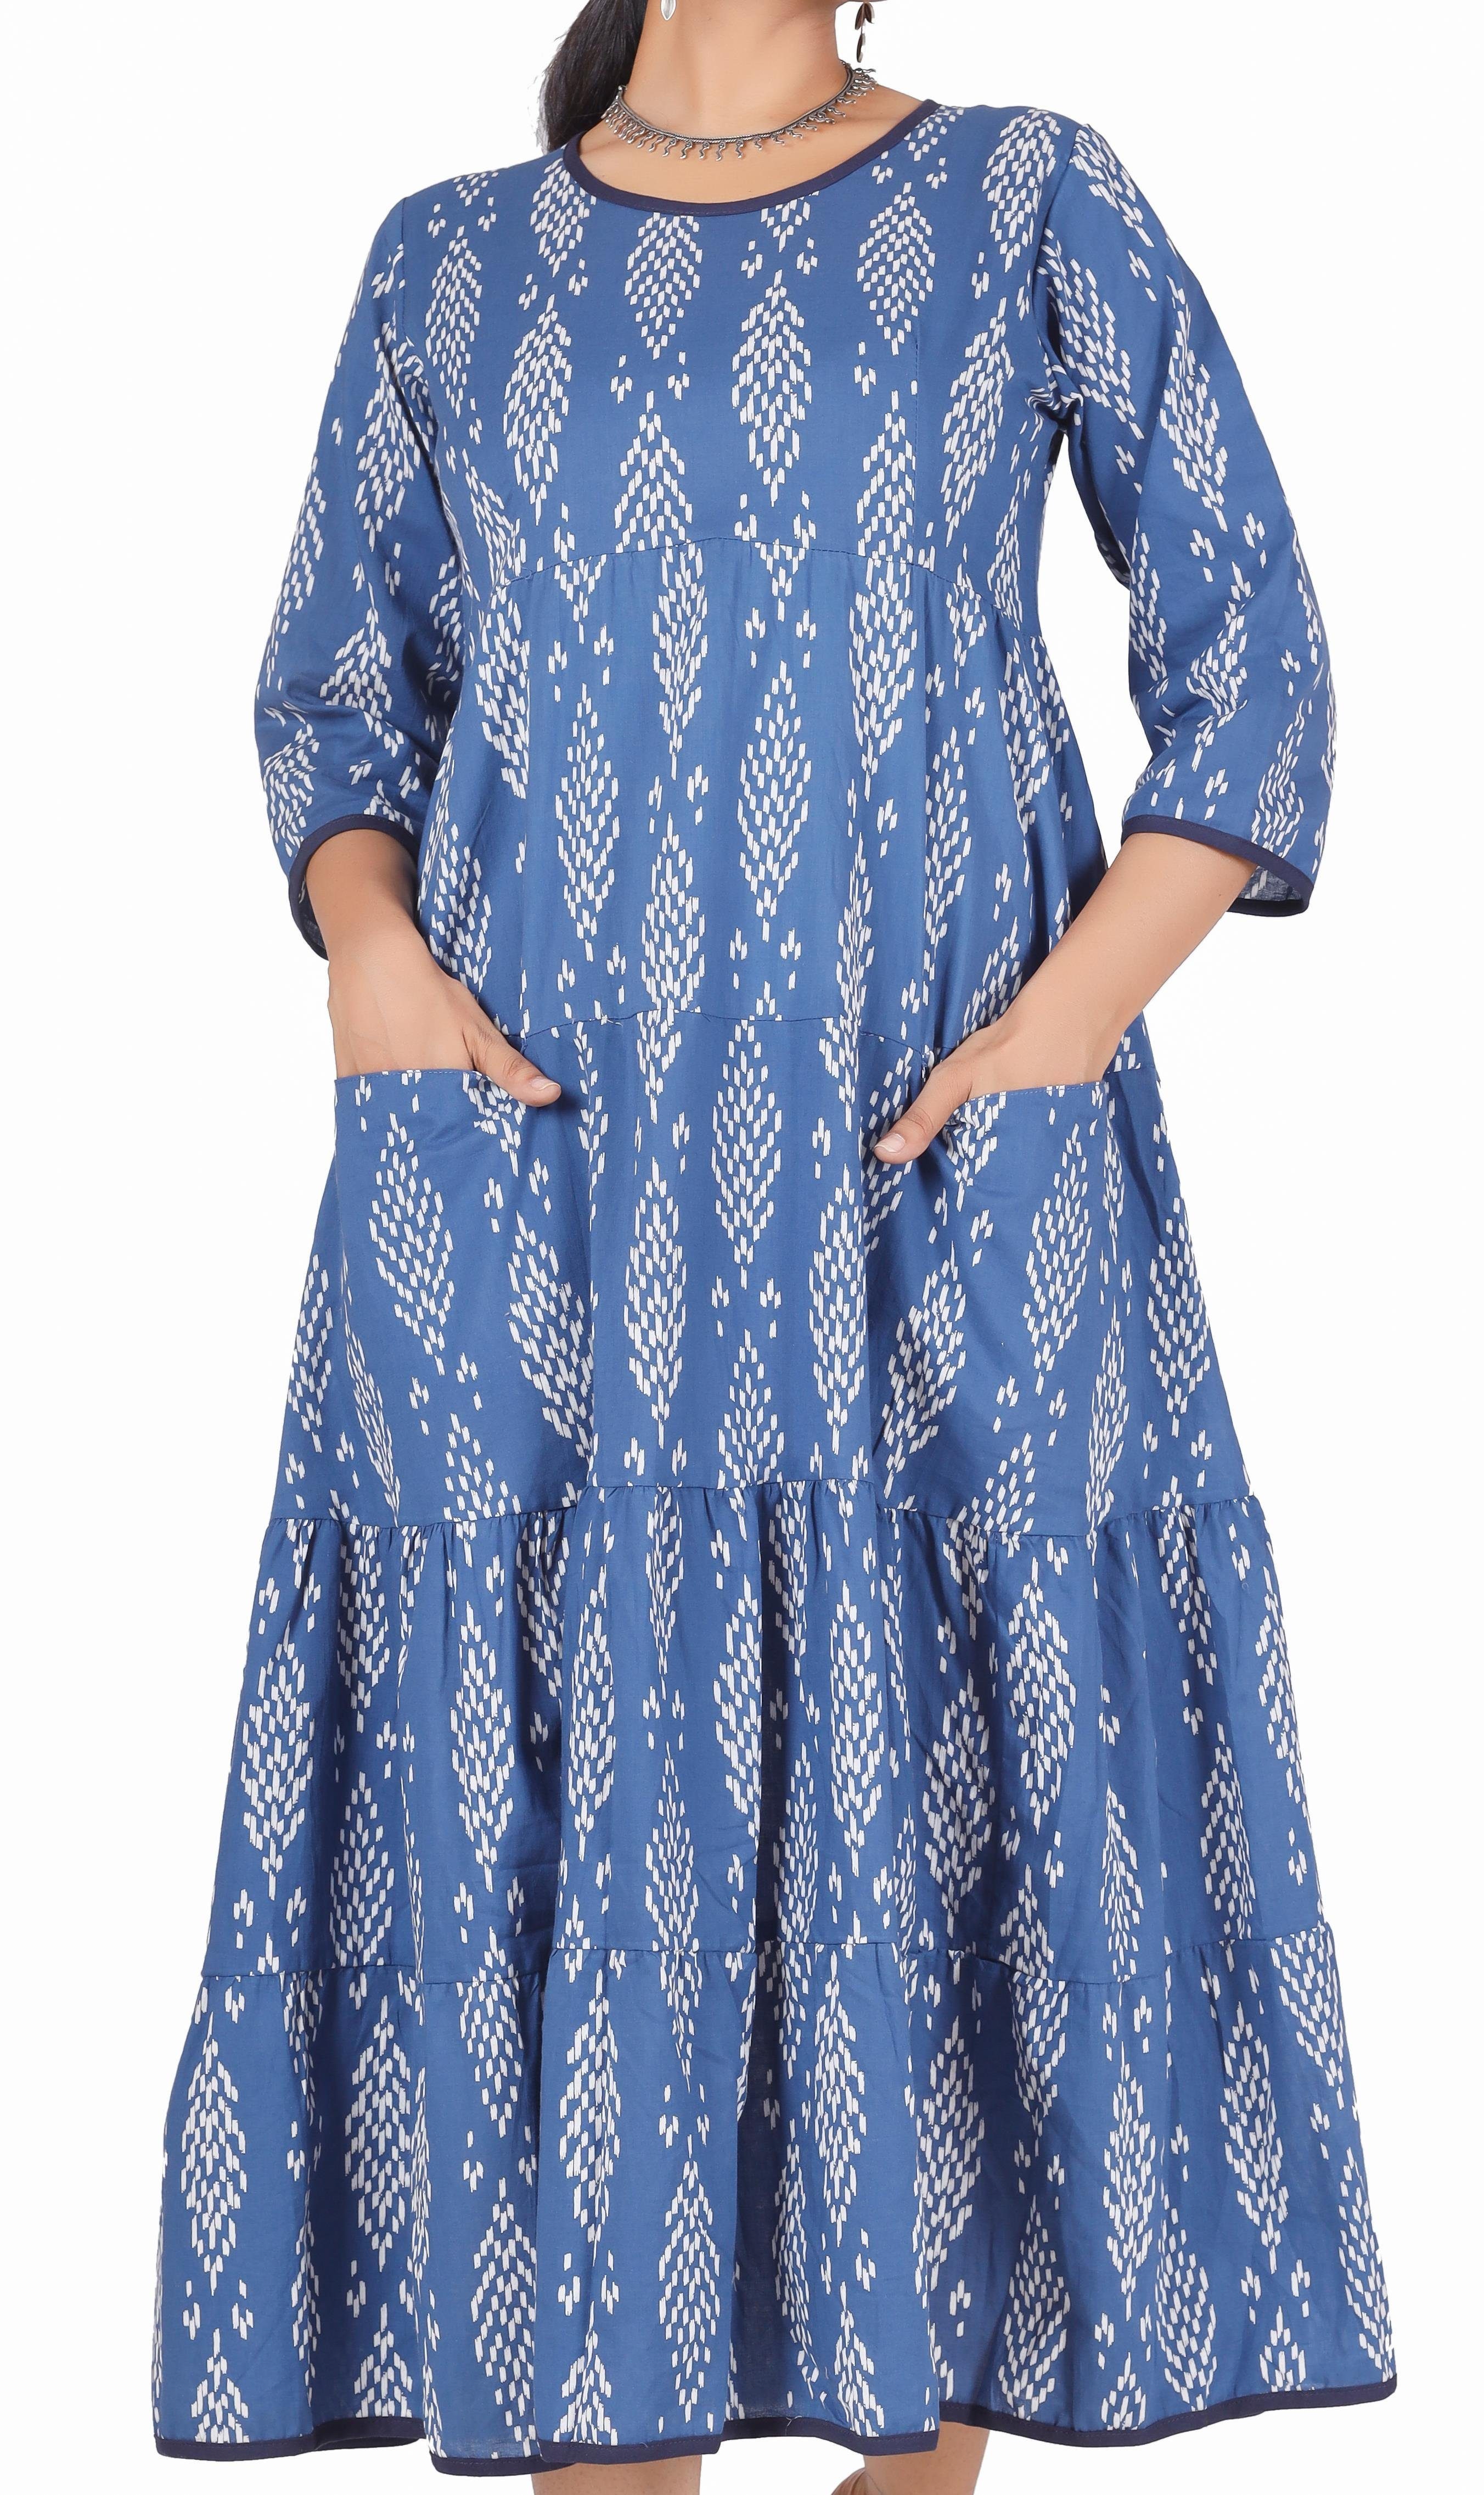 Guru-Shop Midikleid Boho Sommerkleid, bedrucktes wadenlanges Kleid.. alternative Bekleidung indigo